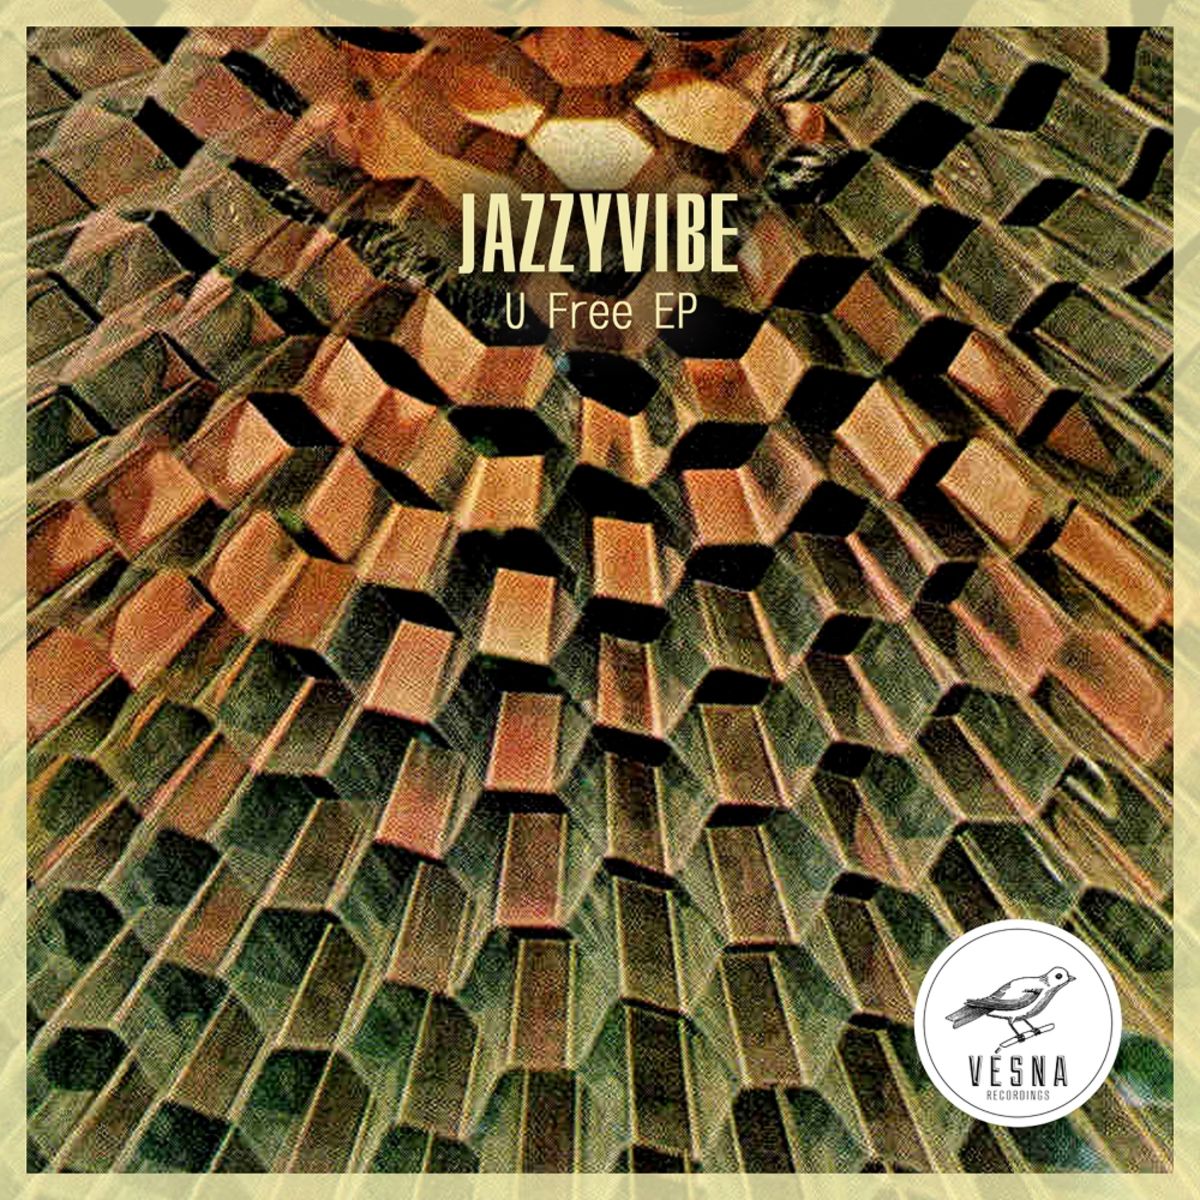 Jazzyvibe - U Free EP / Vesna Recordings